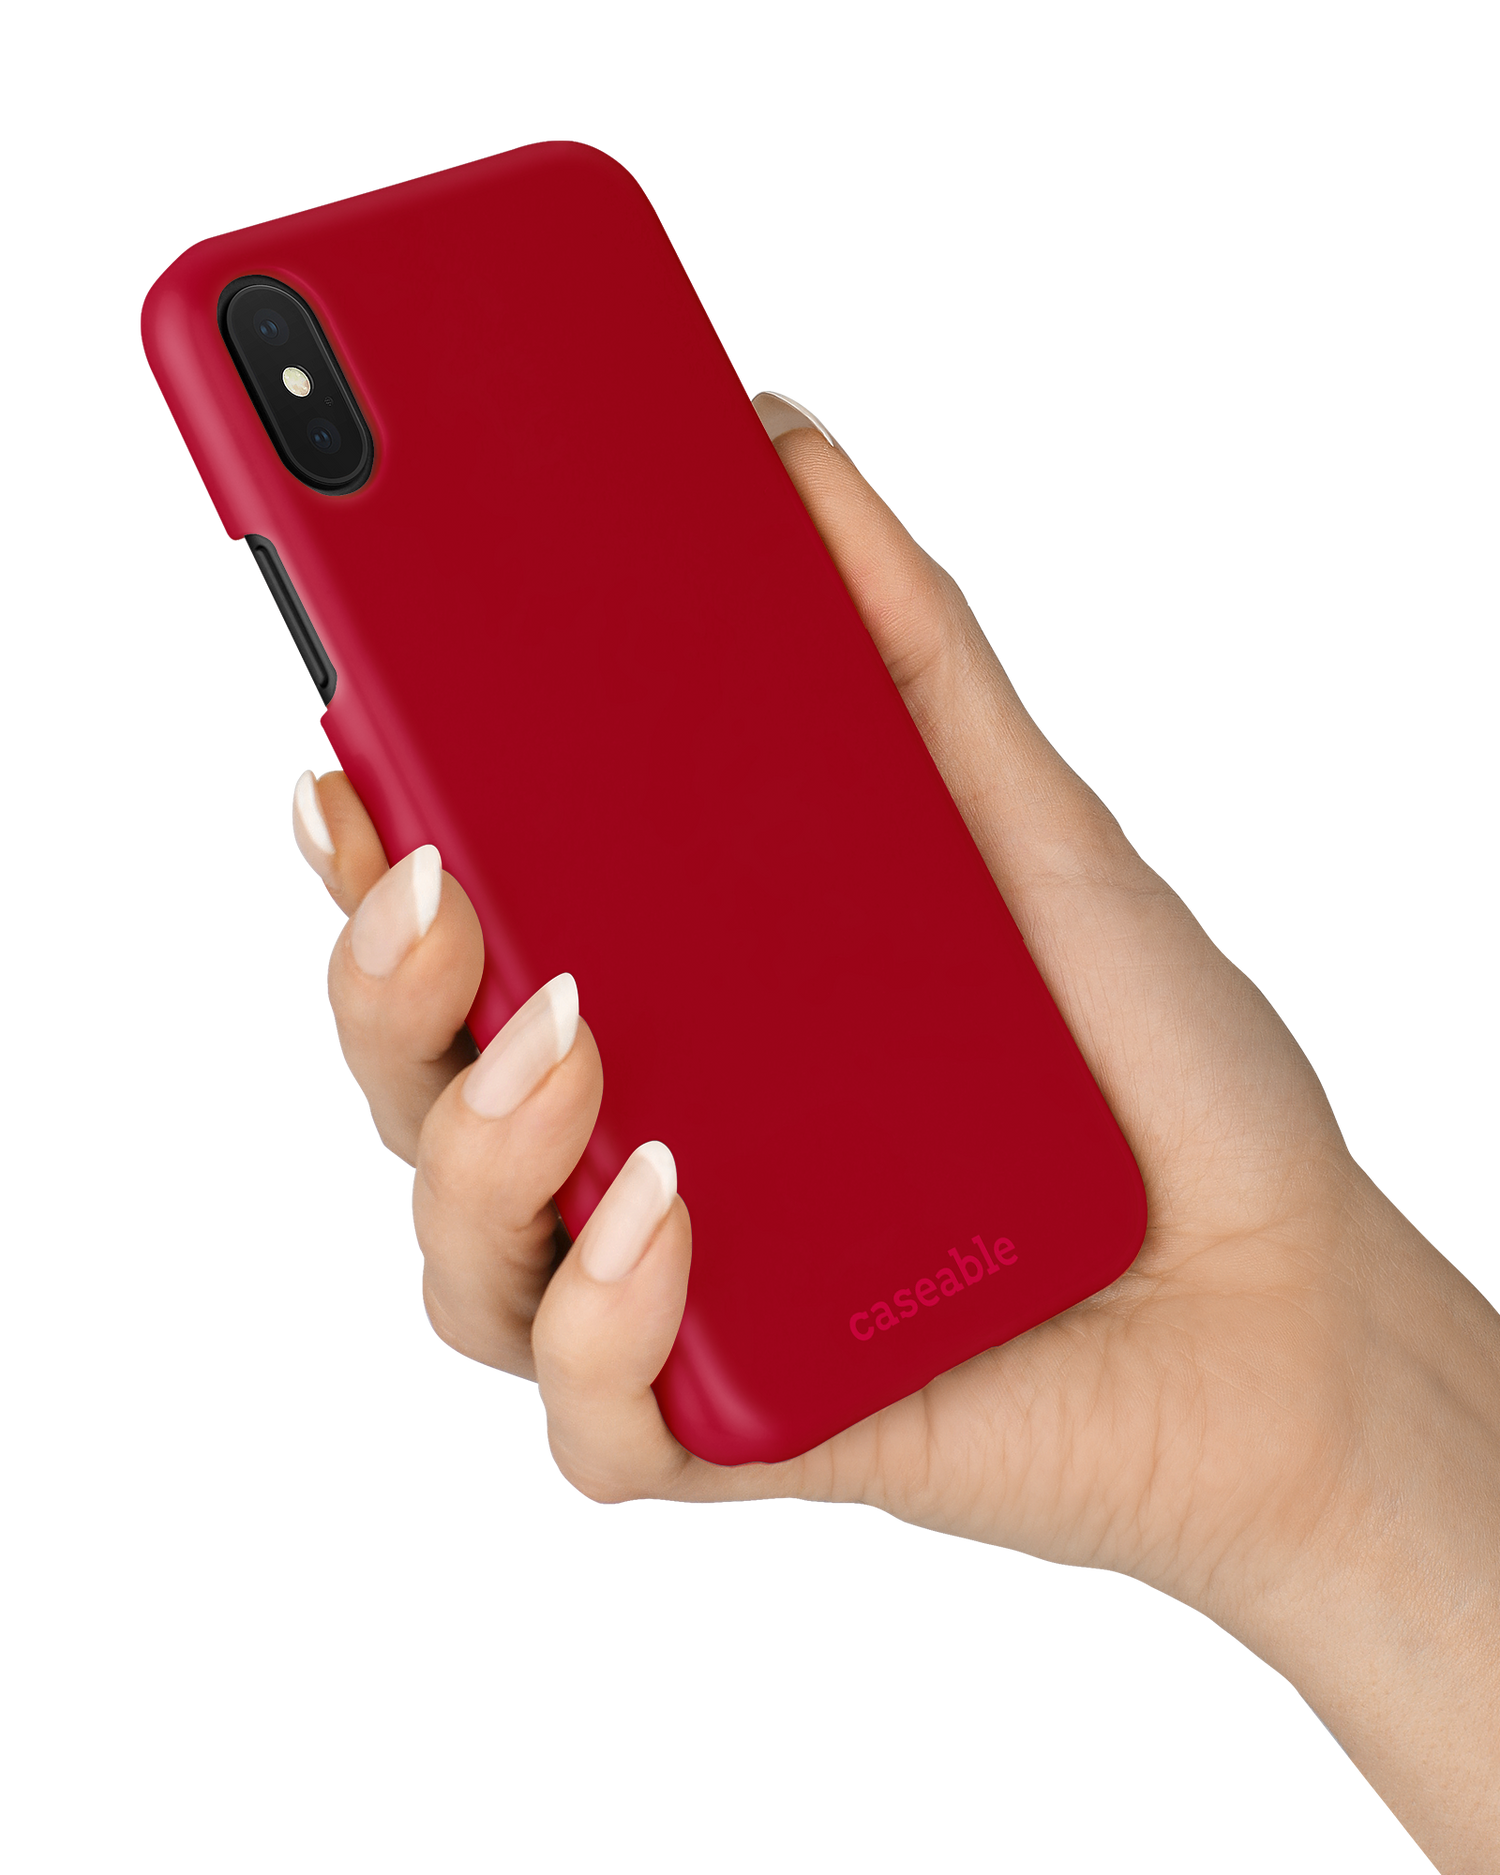 RED Hardcase Handyhülle Apple iPhone X, Apple iPhone XS in der Hand gehalten